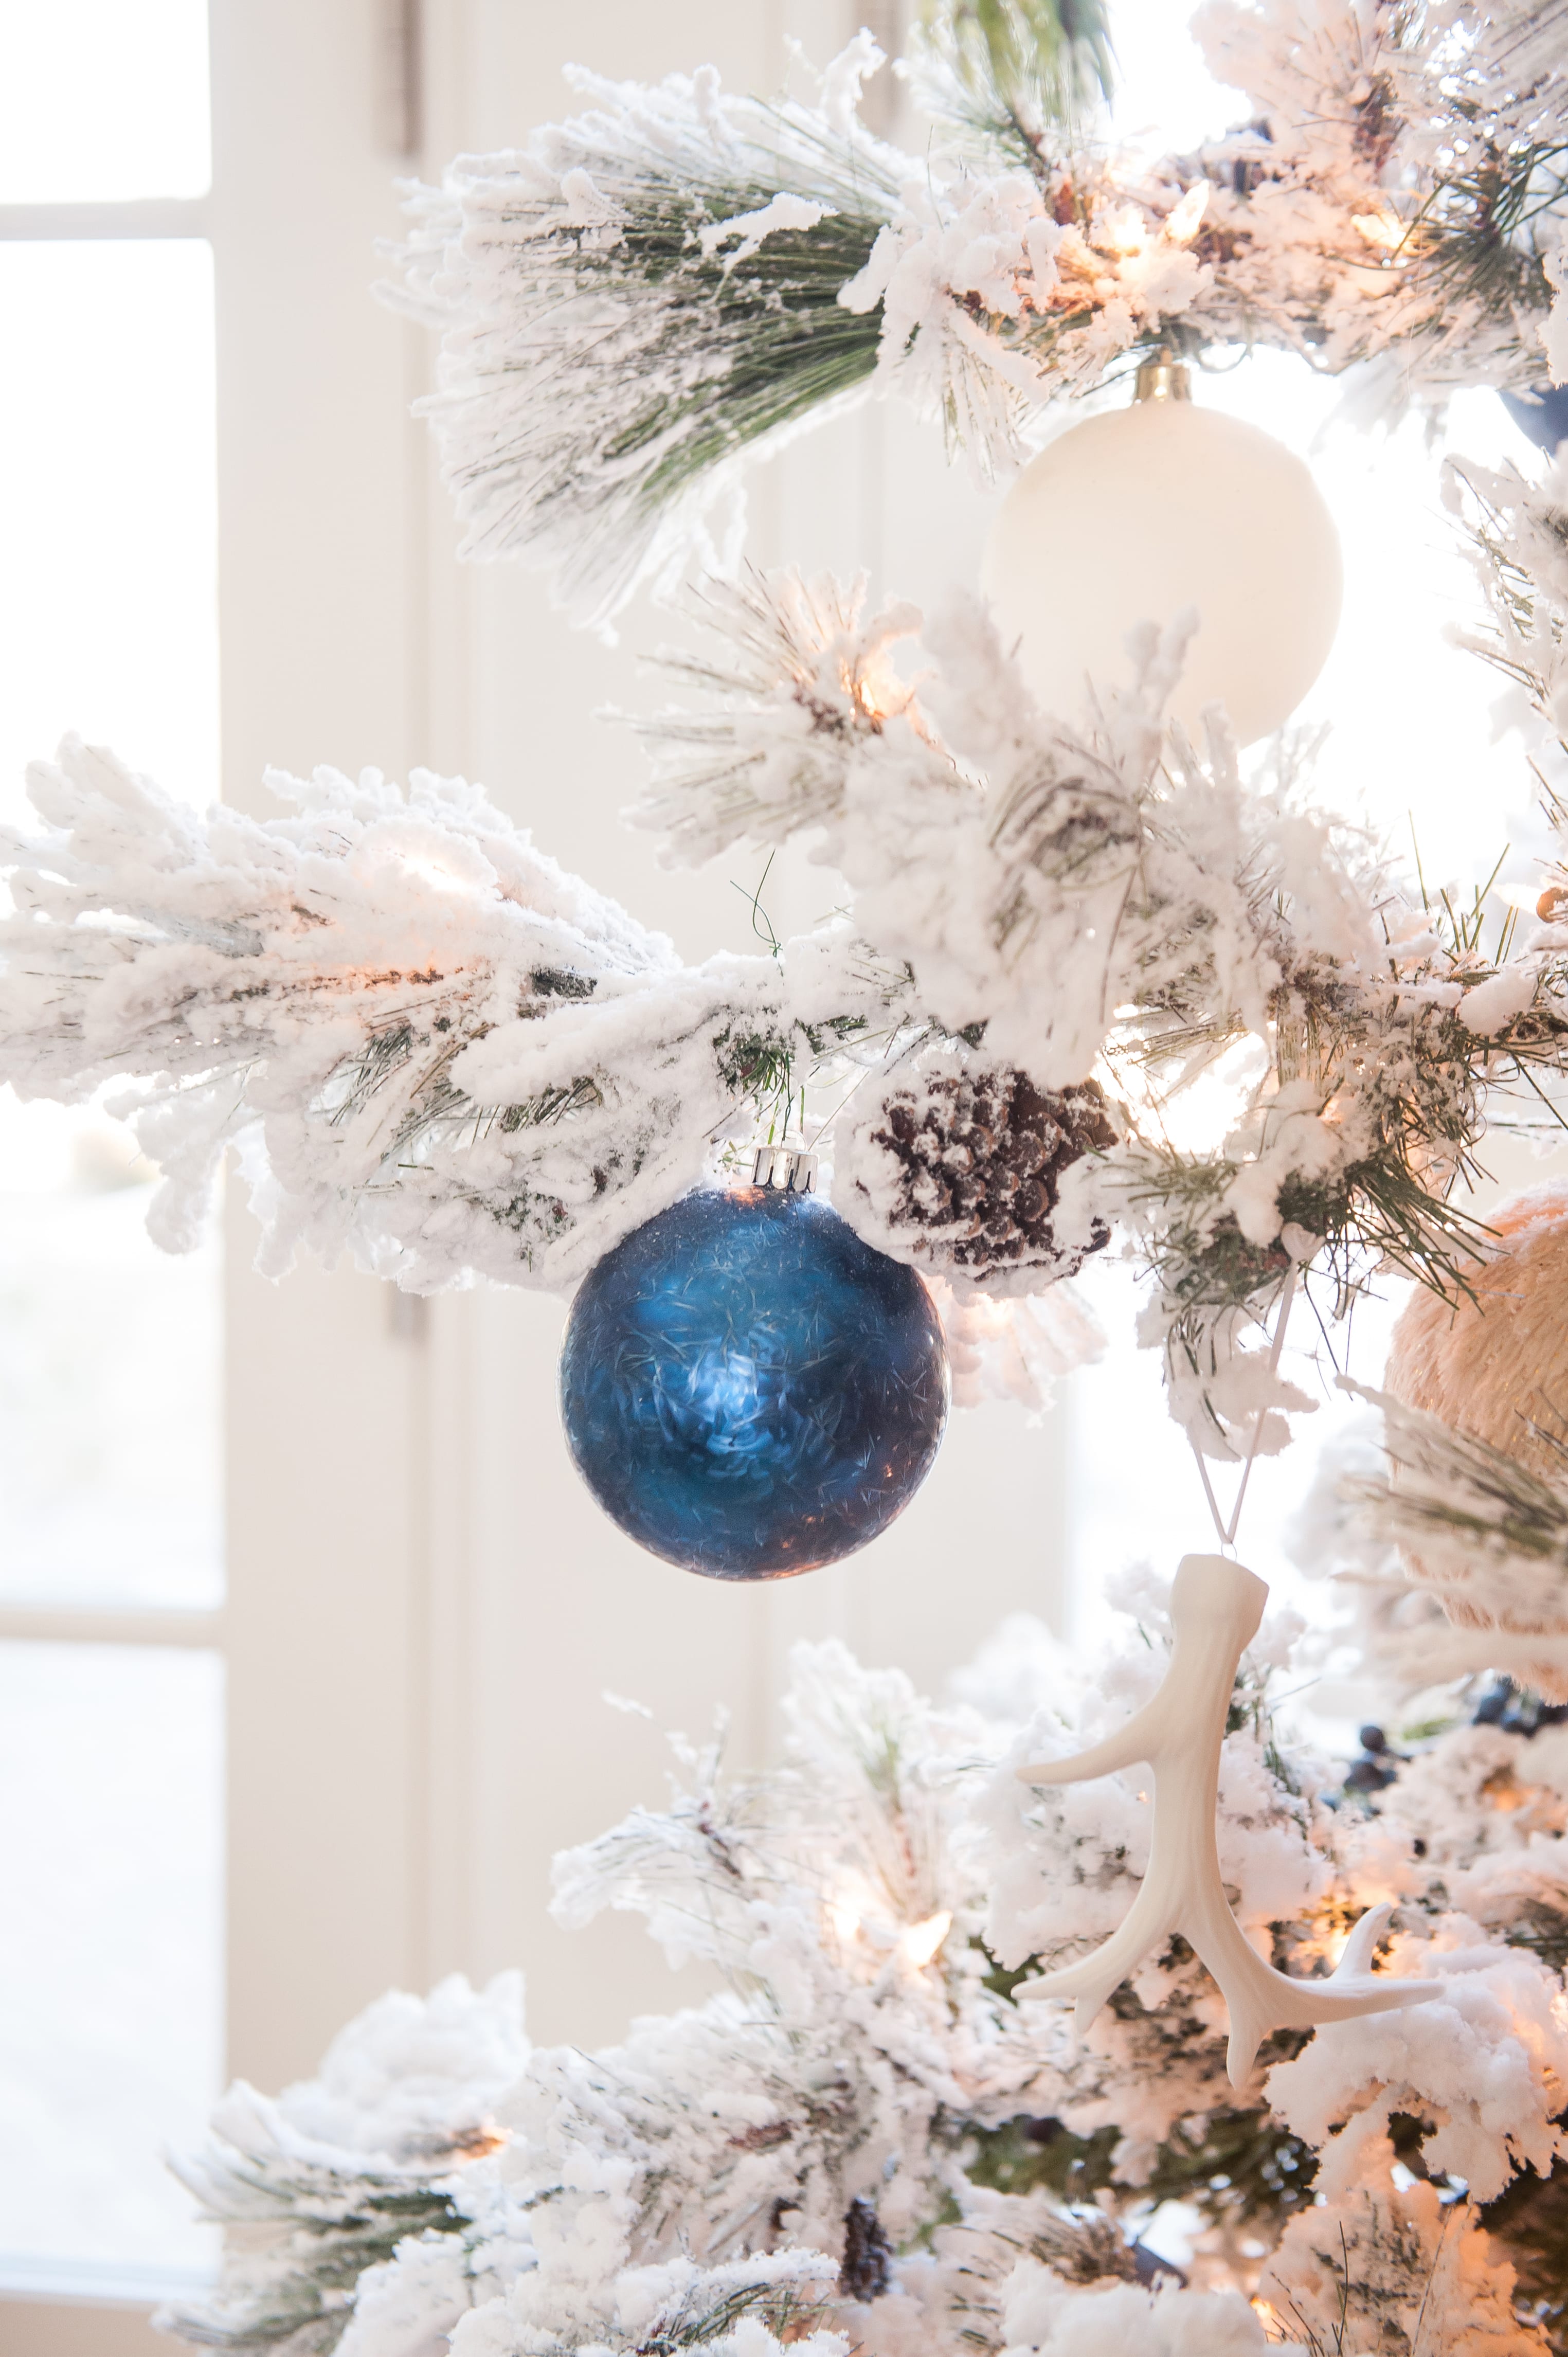 blue christmas ornament